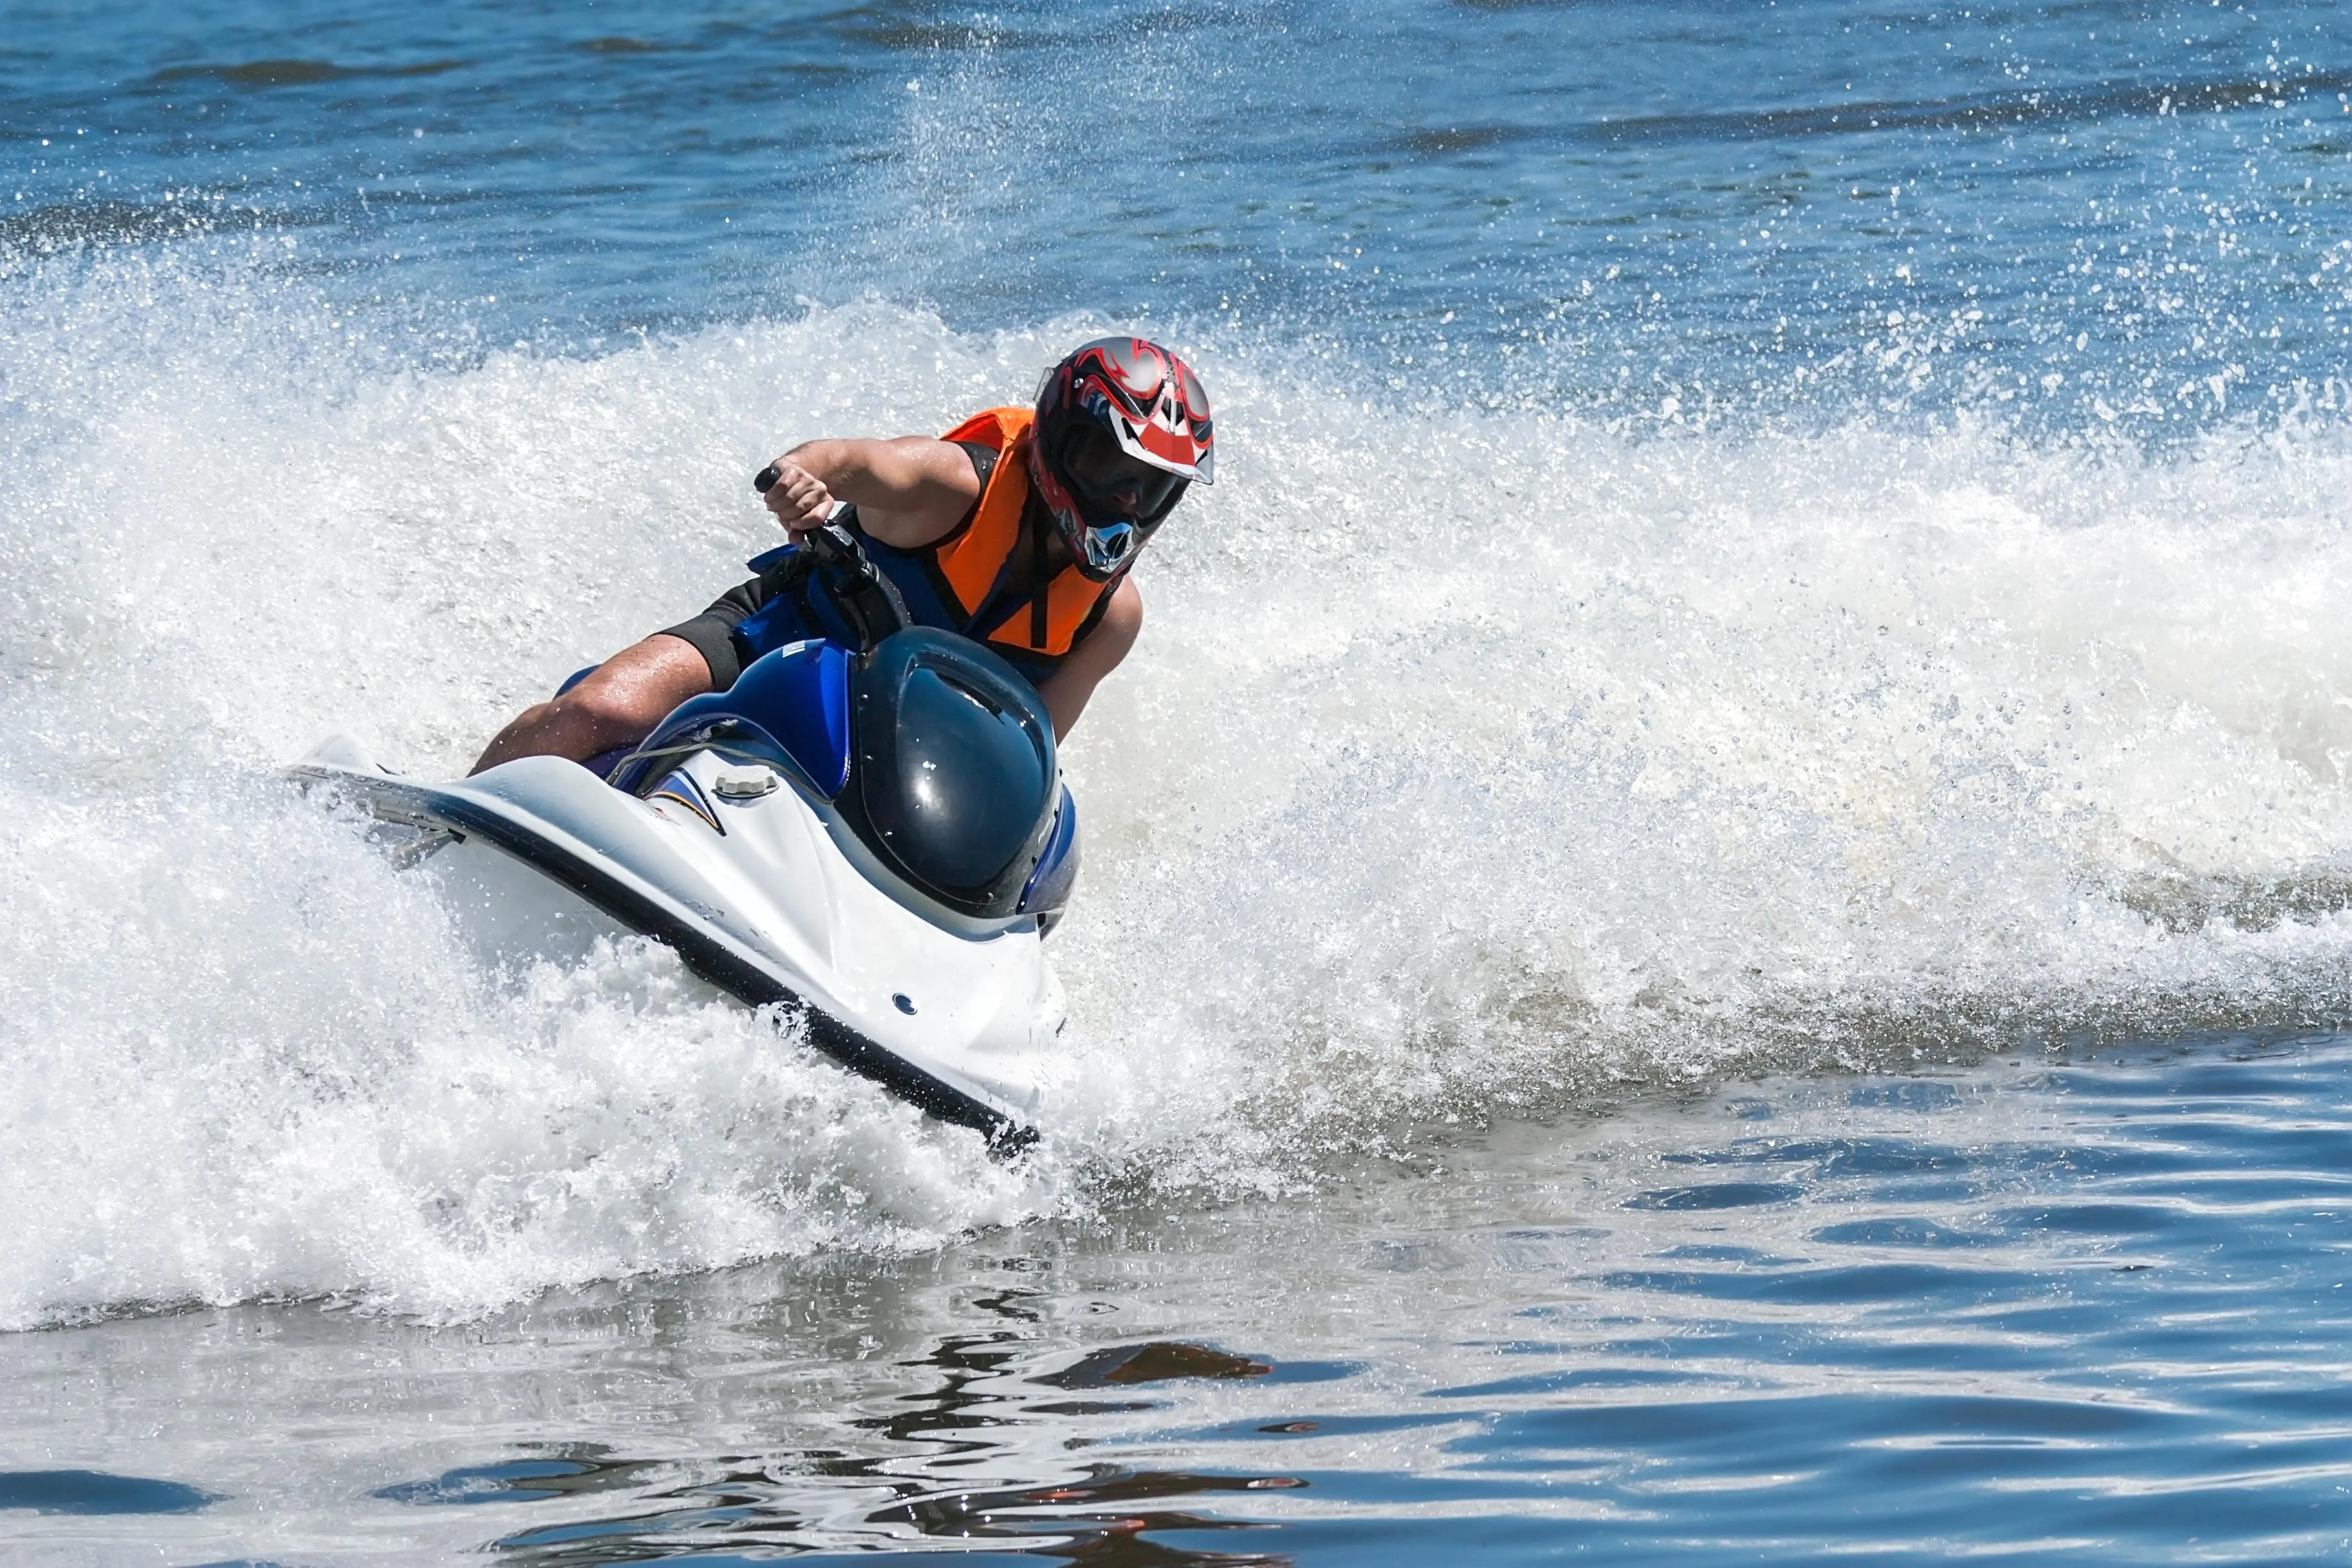 Sun & Fun Water Sports in Malta, Europe | Parasailing,Water Skiing,Jet Skiing - Rated 1